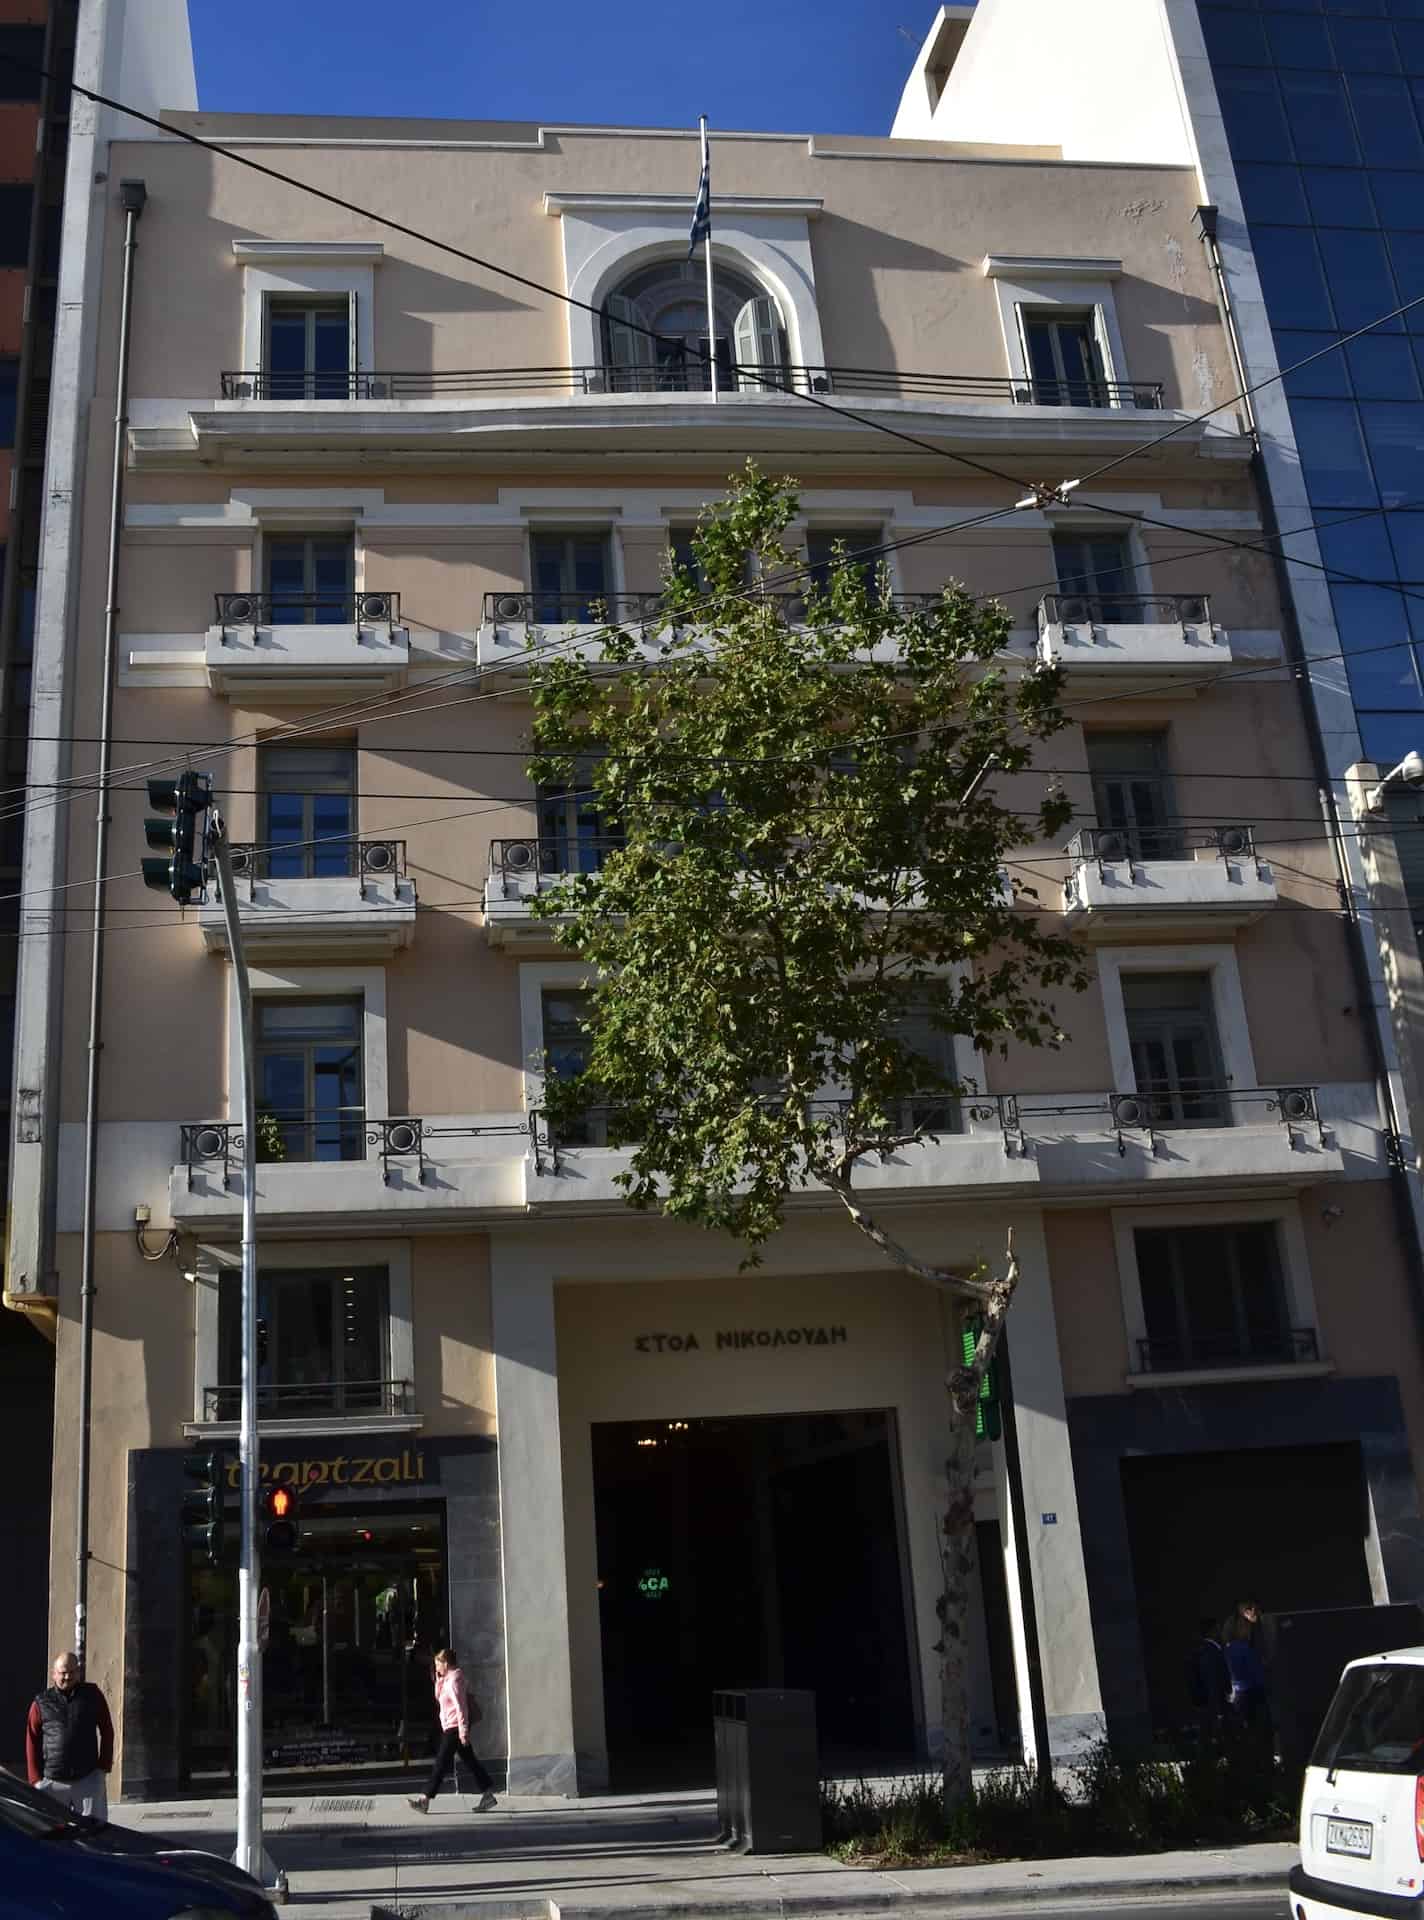 Building containing Stoa Nikoloudi